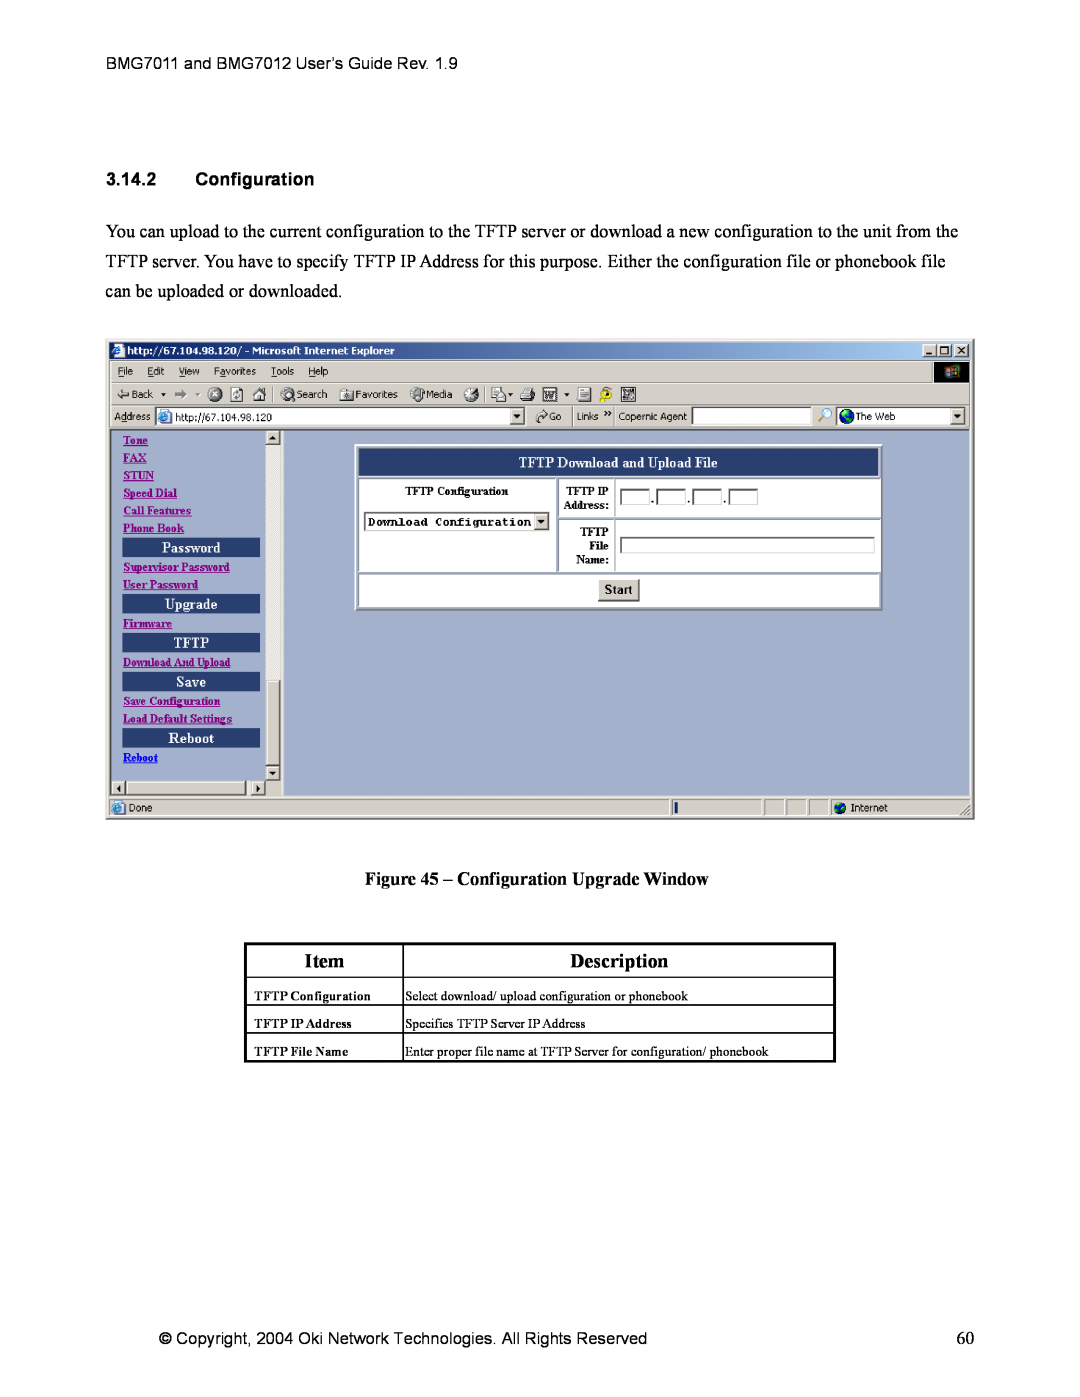 Oki BMG7012, BMG7011 manual 3.14.2Configuration, Configuration Upgrade Window, Description 